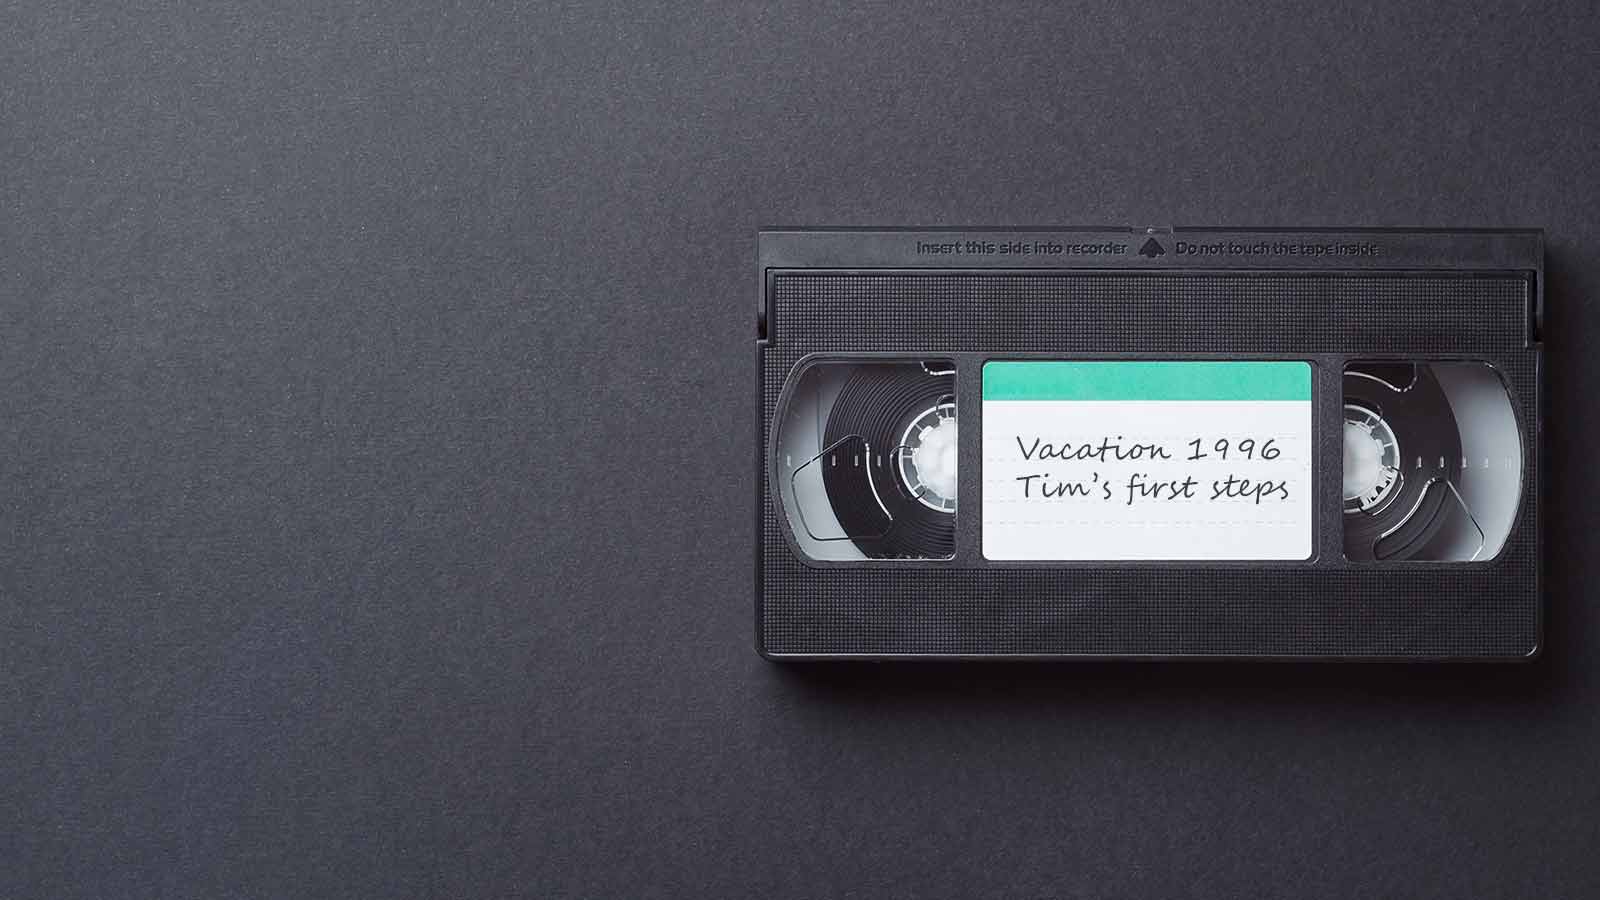 VHS Video Player / Recorder Kit - Convert Copy VHS Tape To DVD, PC + VCR  PLAYER!